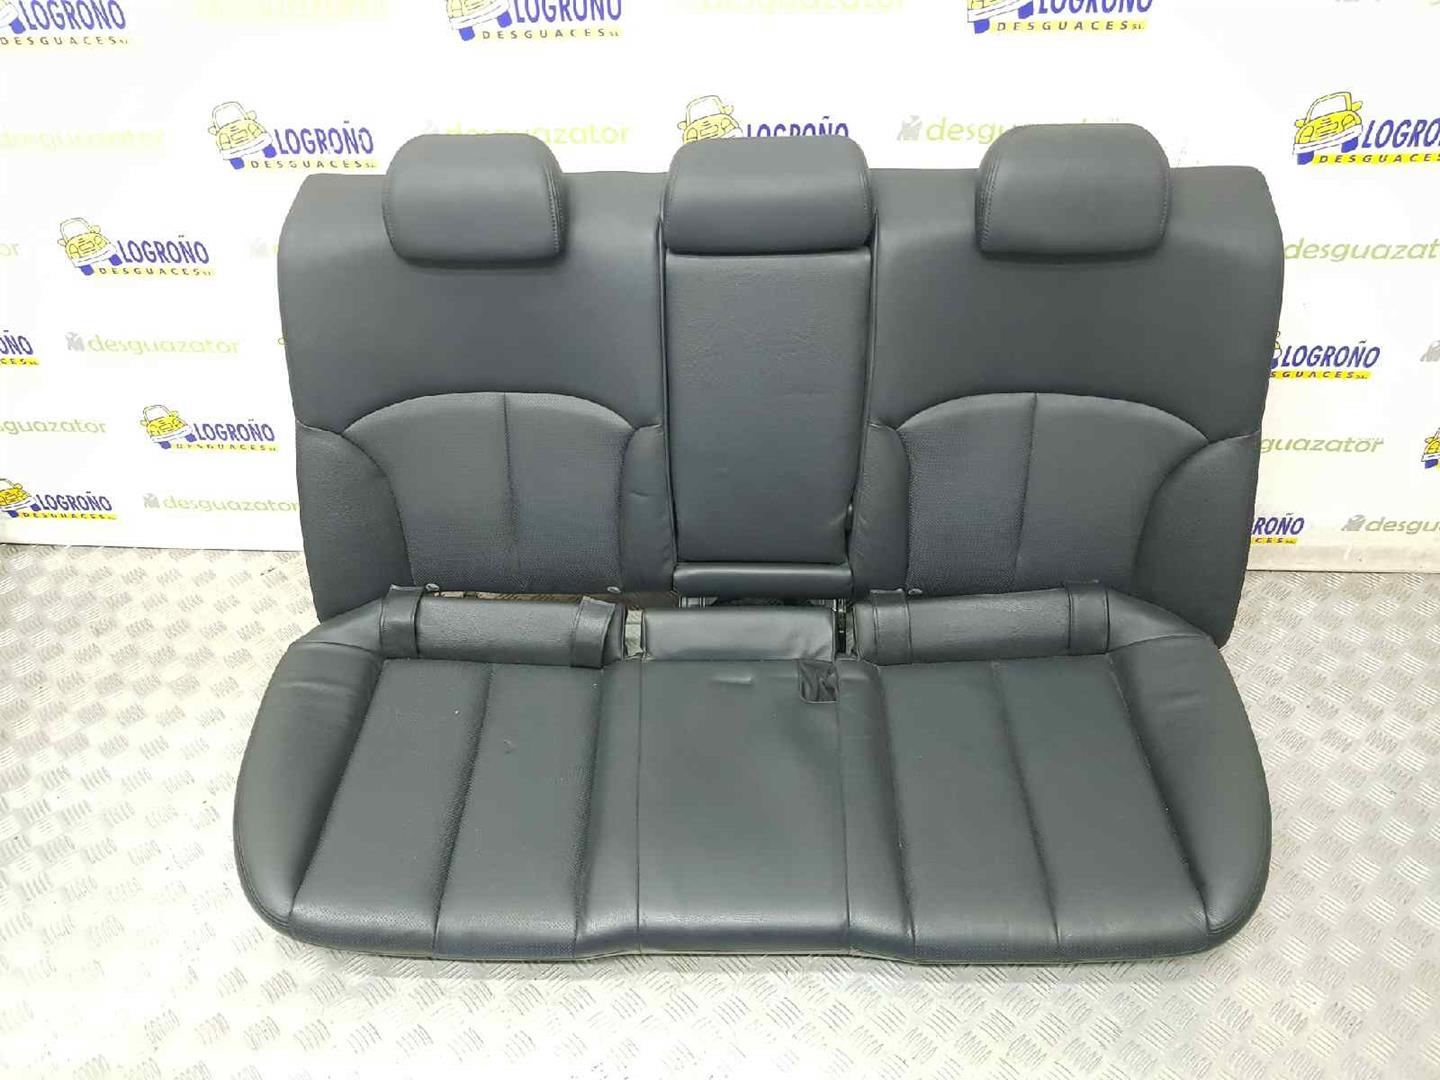 SUBARU Legacy 5 generation (2009-2015) Seats ASIENTOSDECUERO, NEGRO 23778093